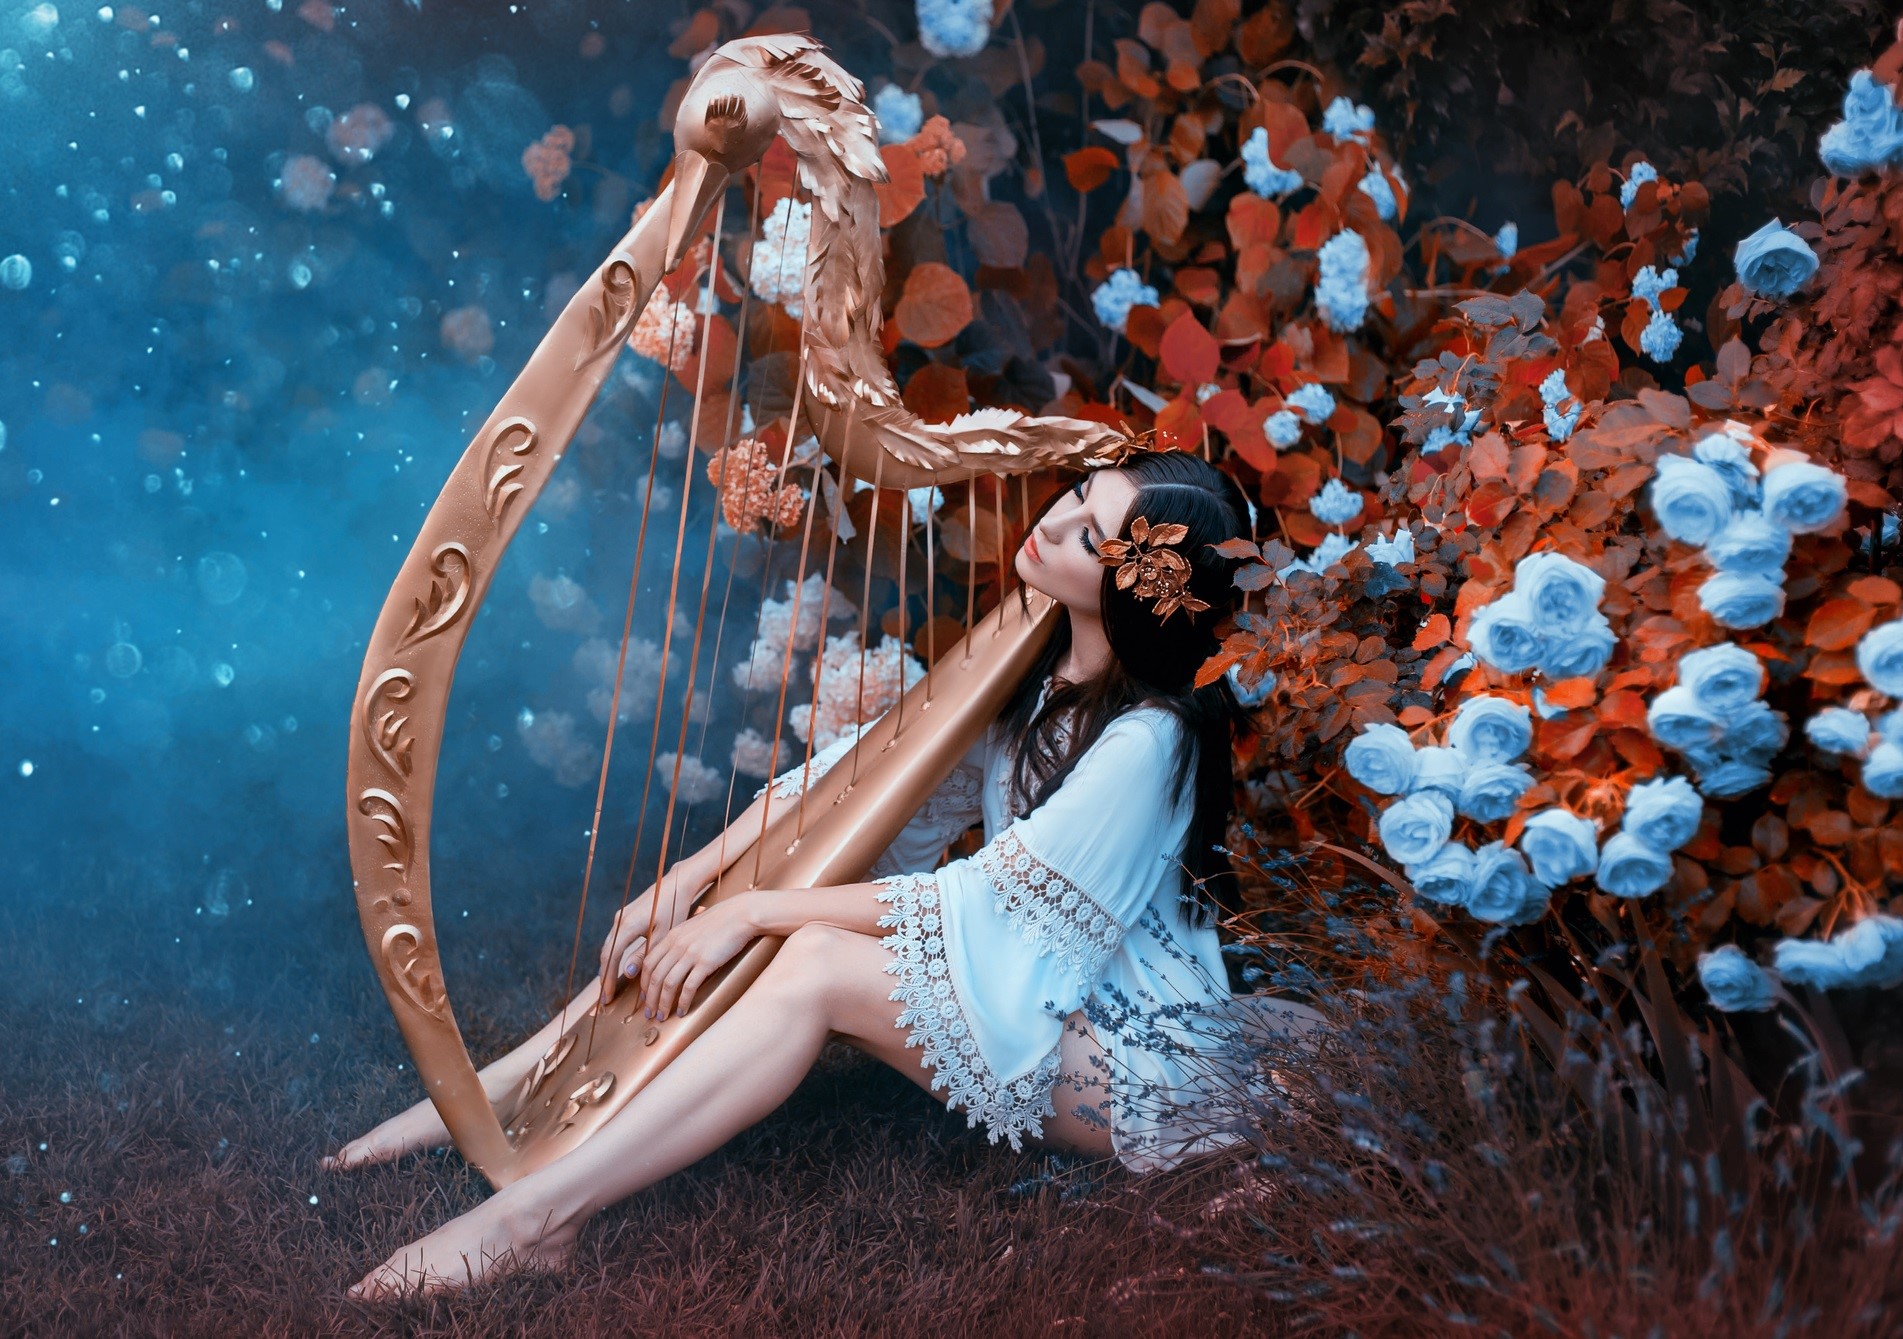 Femeie imbracata intr-o rochie alba, asezata in sezut, canta la harpa intr-un decor cu flori